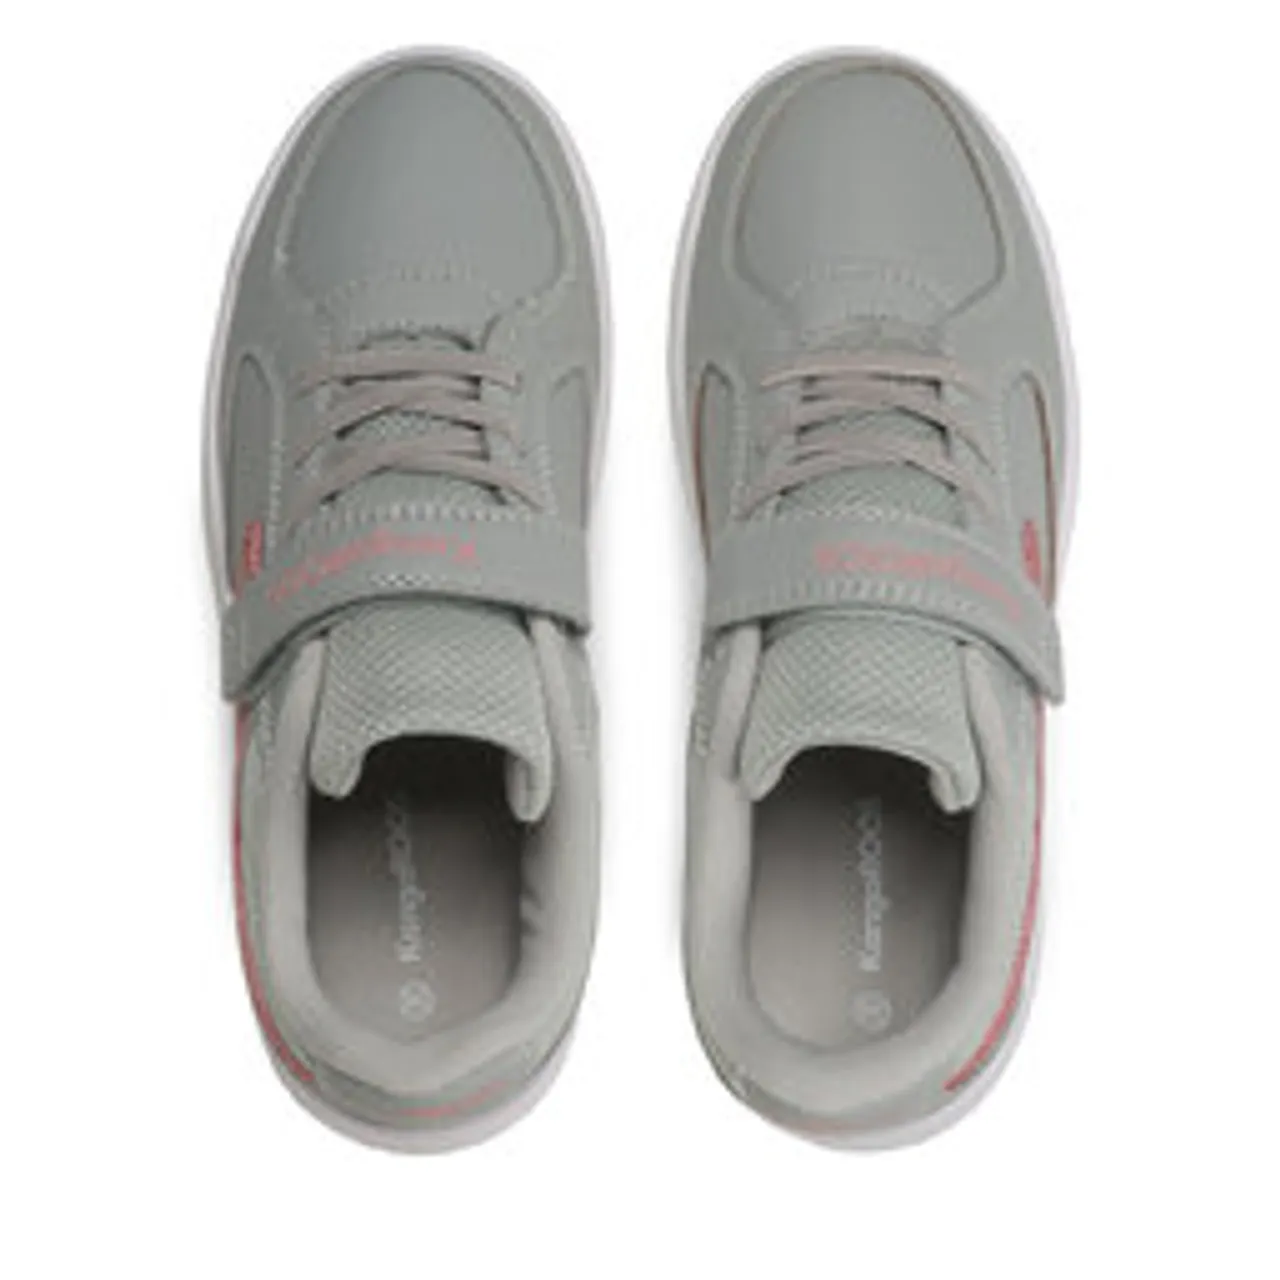 Sneakers KangaRoos K-Cope Ev 18614 000 2075 Vapor Grey/Dusty Rose